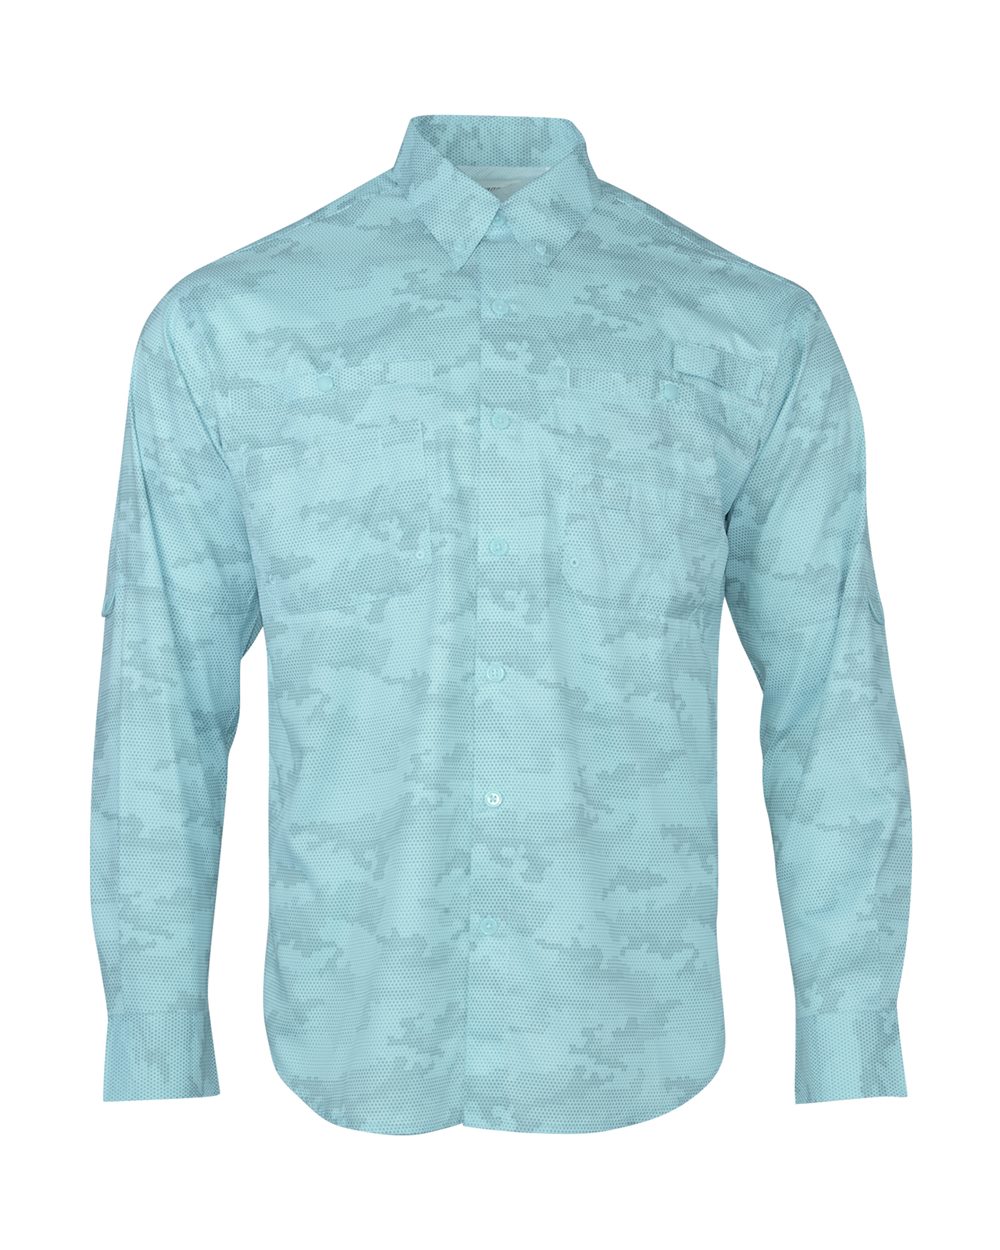 Paragon 709 - Buxton Sublimated Long Sleeve Fishing Shirt